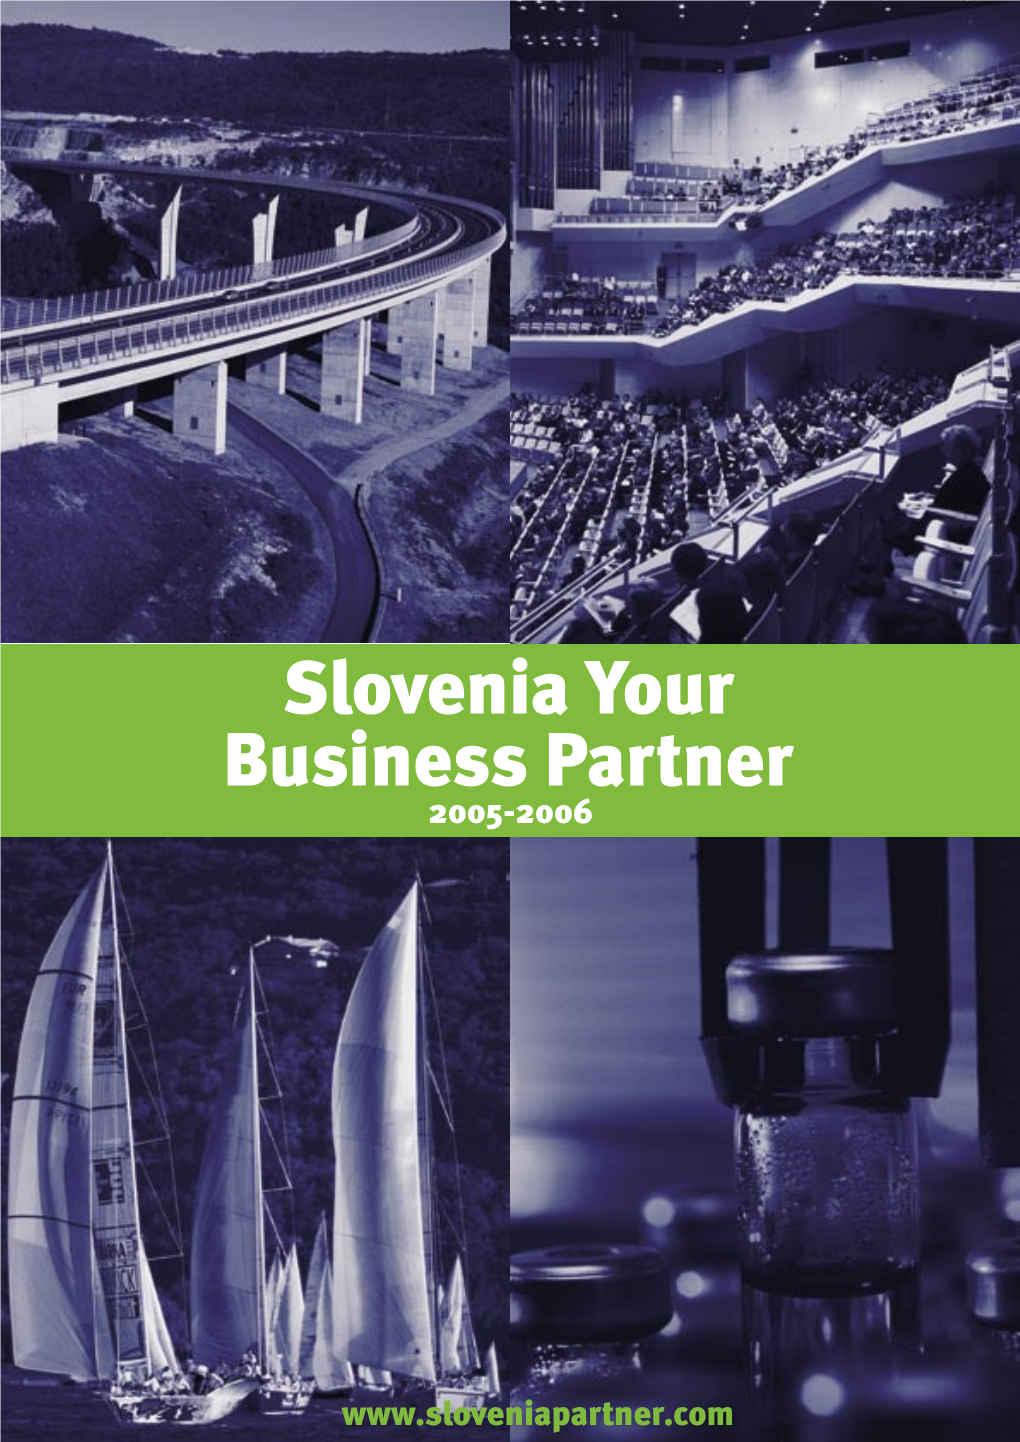 Slovenia Your Business Partner 2005-2006